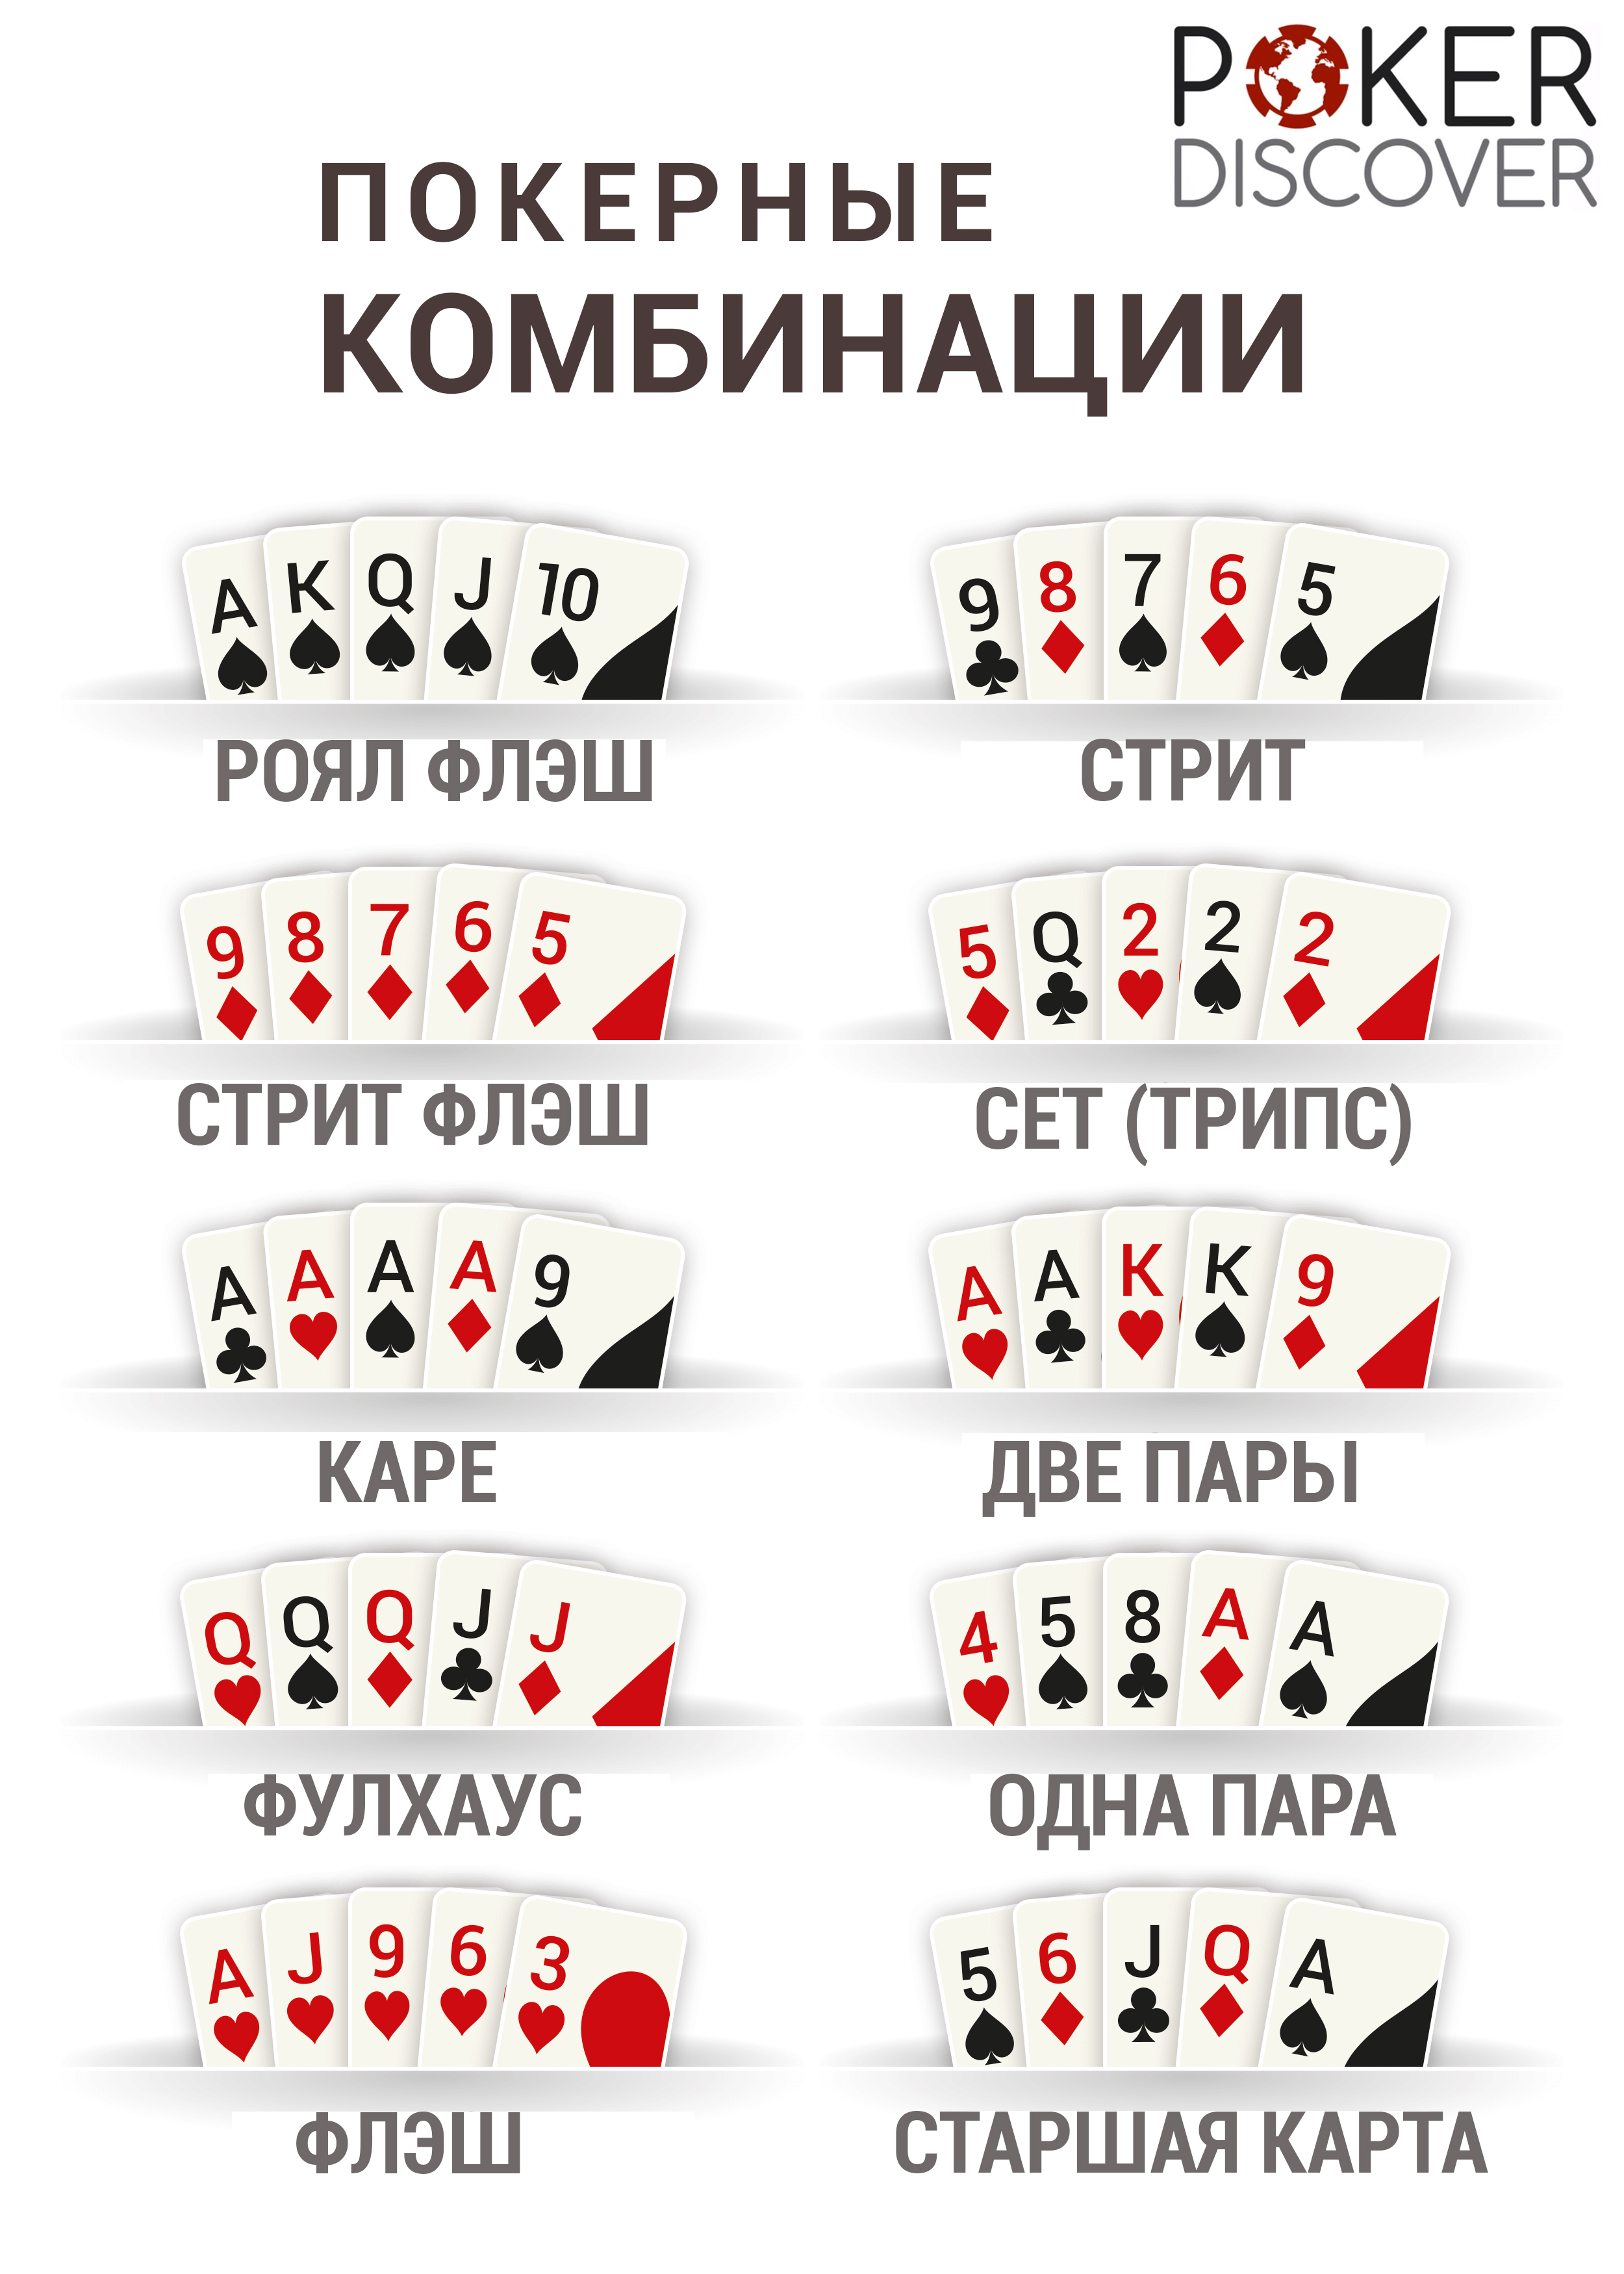 poker-hand-rankings